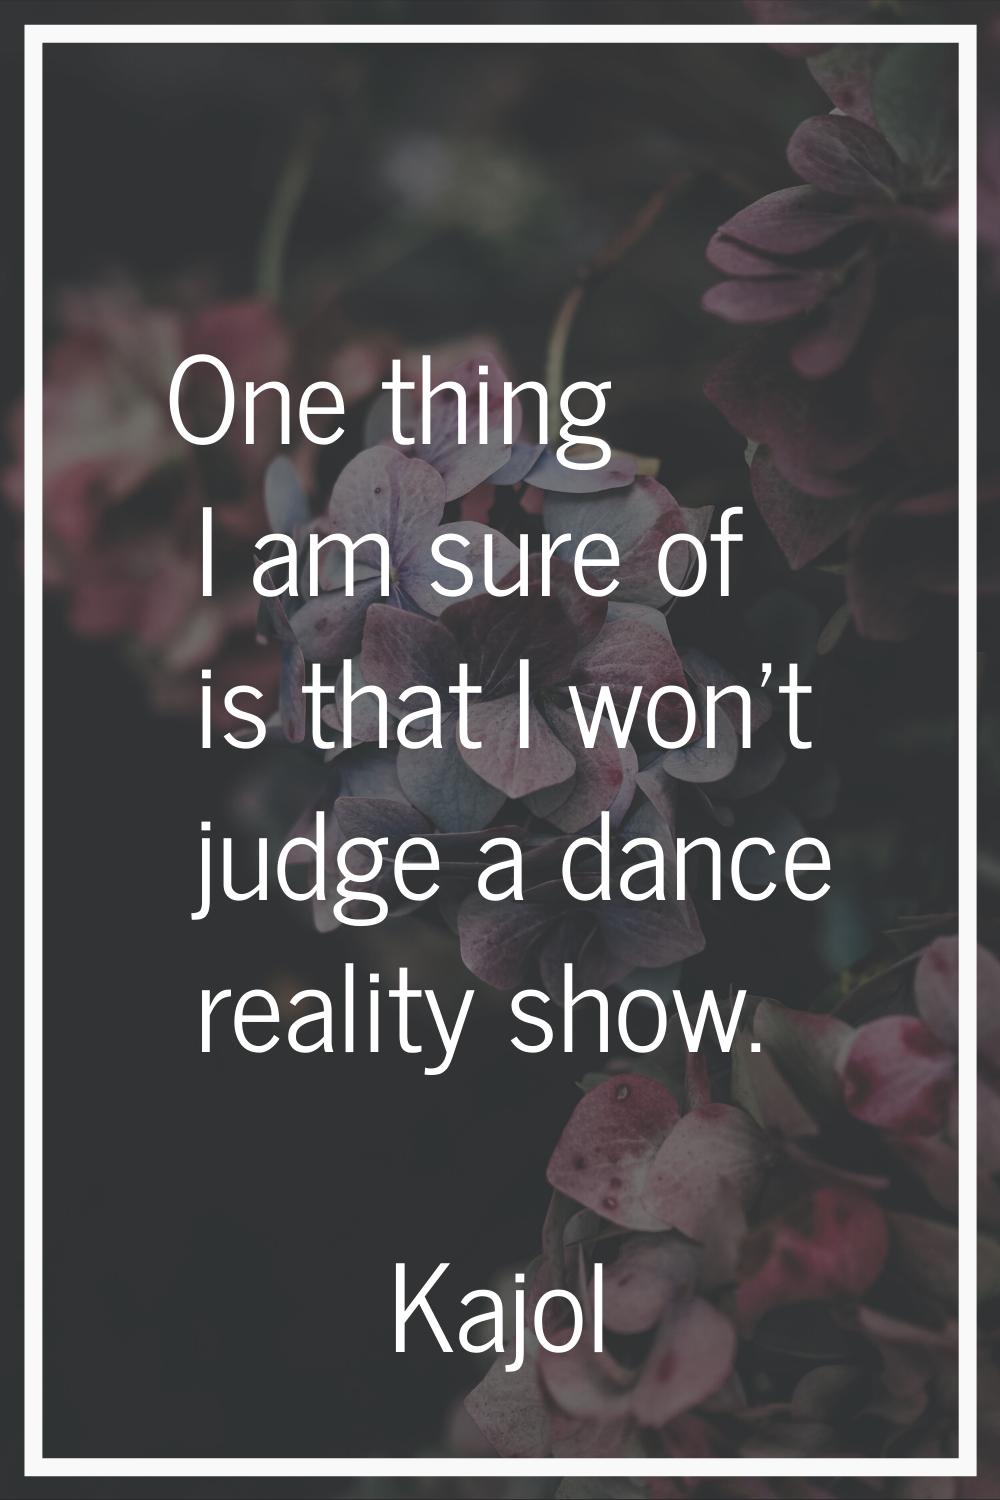 One thing I am sure of is that I won't judge a dance reality show.